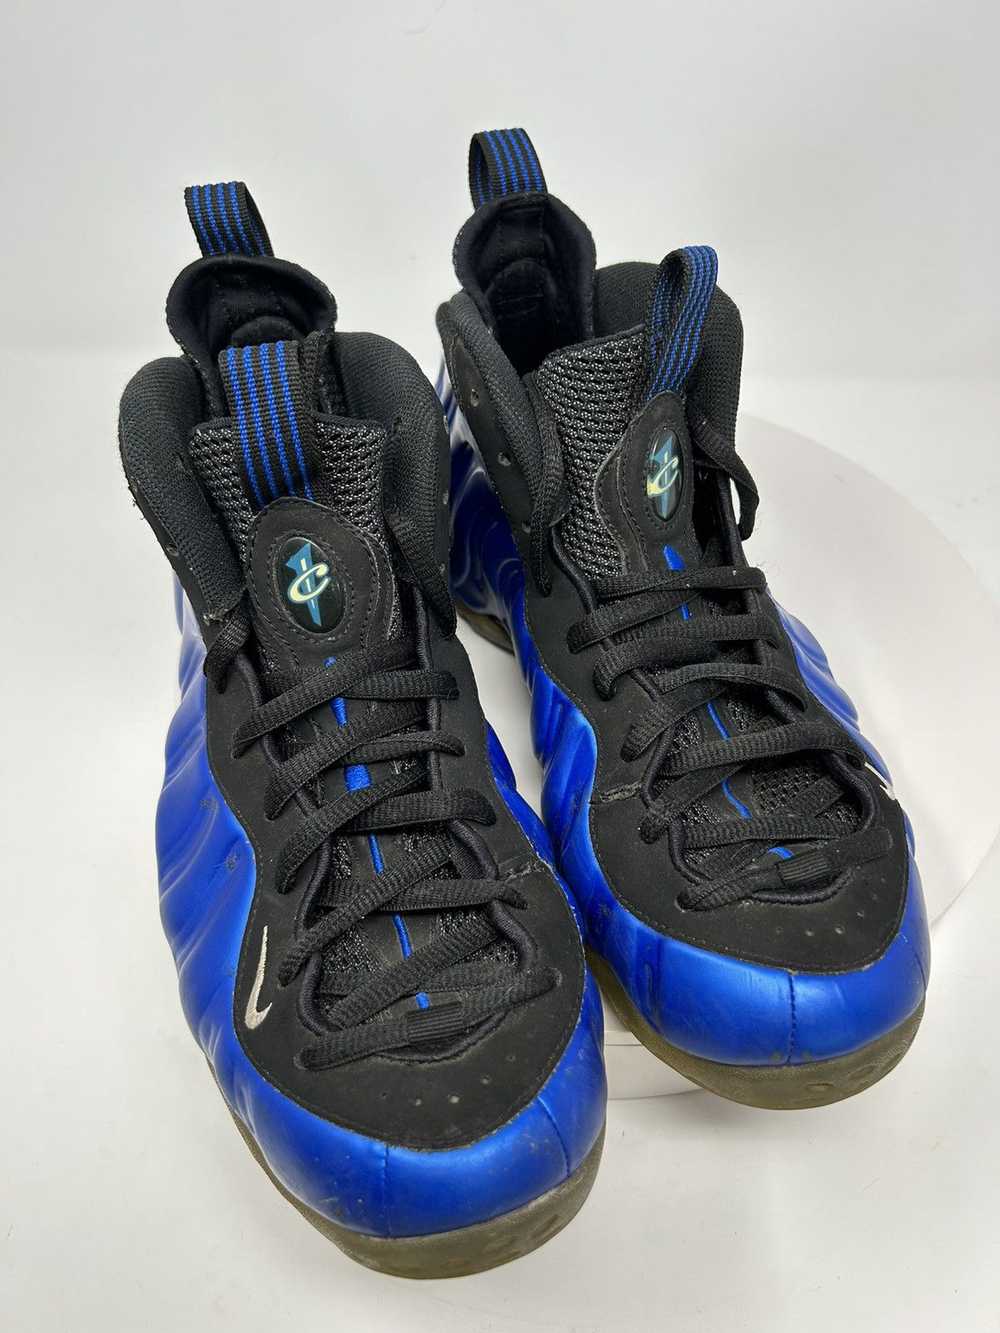 Nike Royal blue foamposites 9.5 - image 4